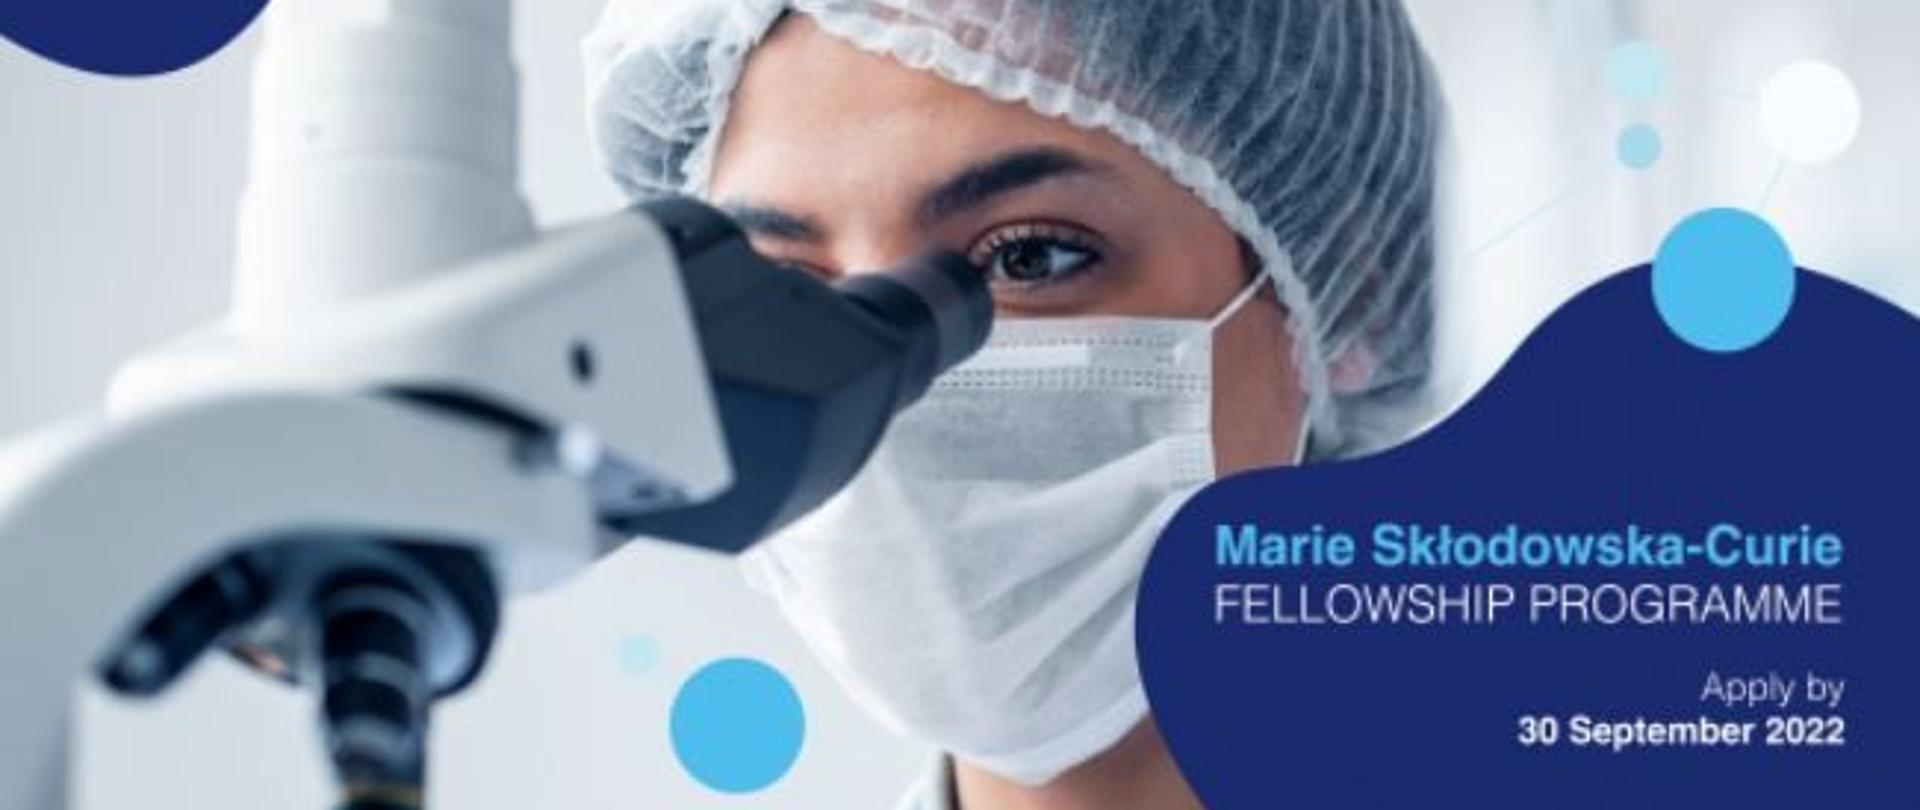 New round of applications for IAEA Marie Skłodowska-Curie Fellowship Programme opens